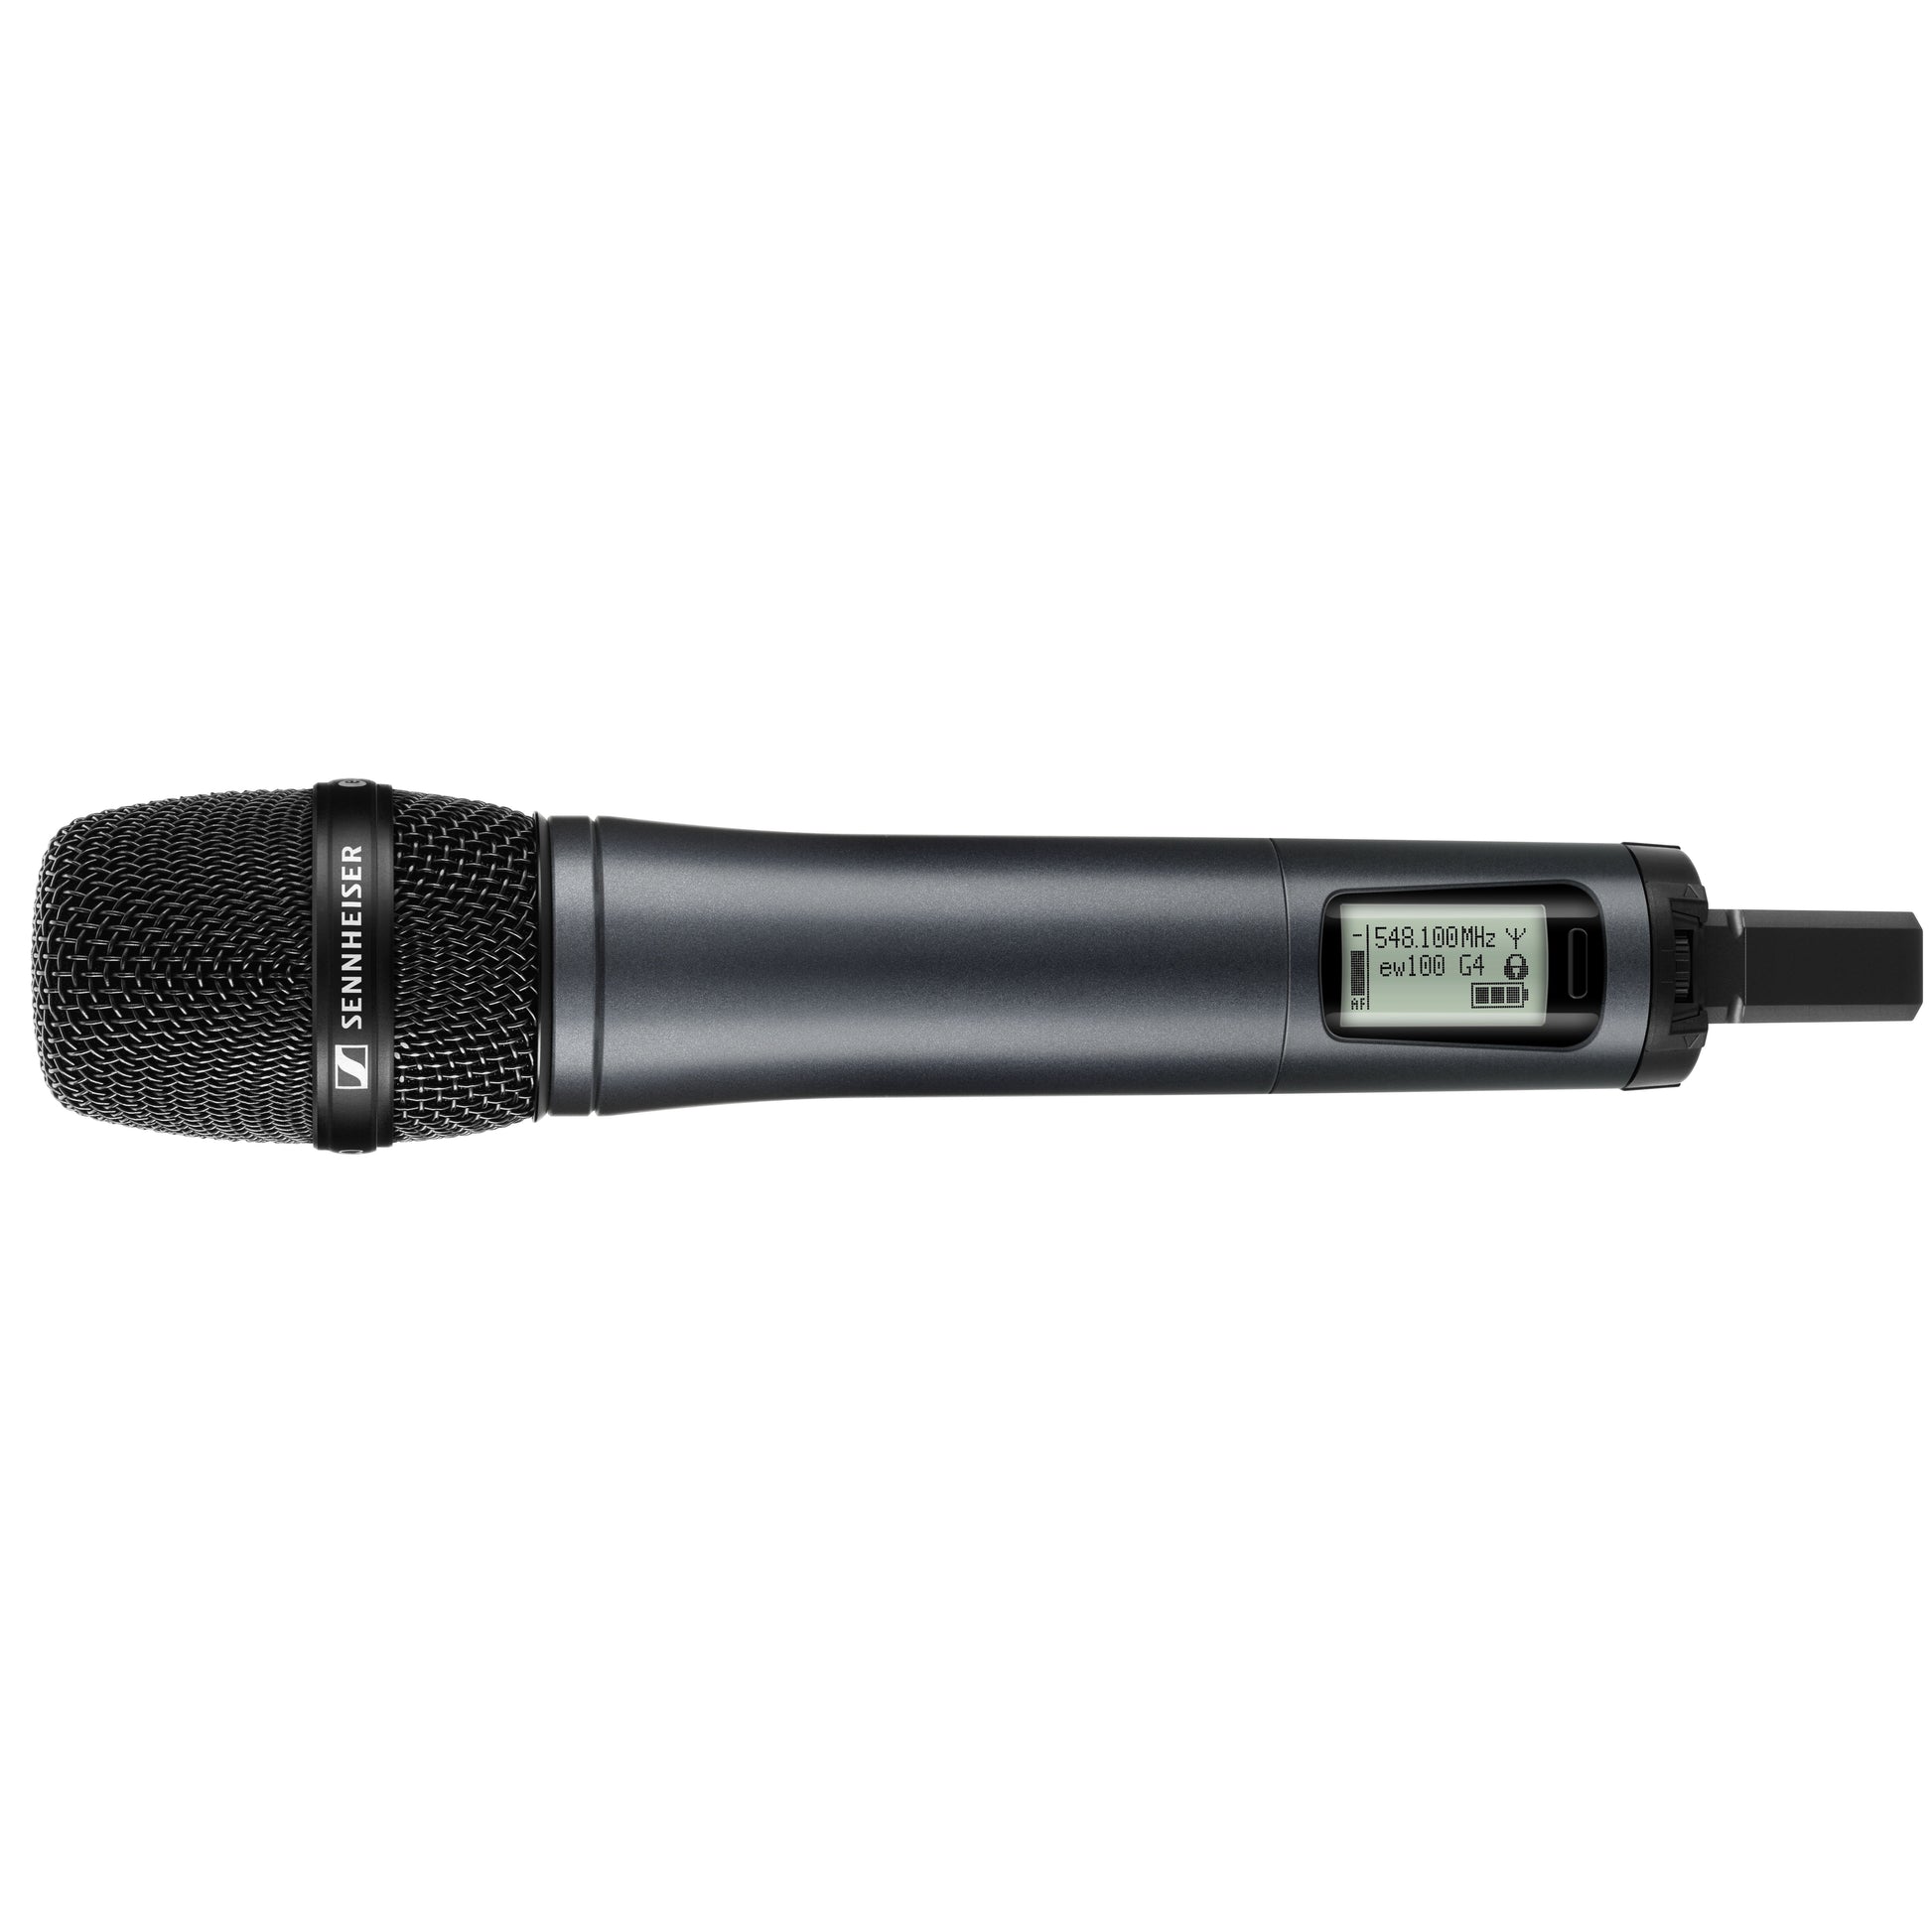 Sennheiser ew100 G4 e865 Vocal Wireless Microphone System, Band G (566-608 MHz)